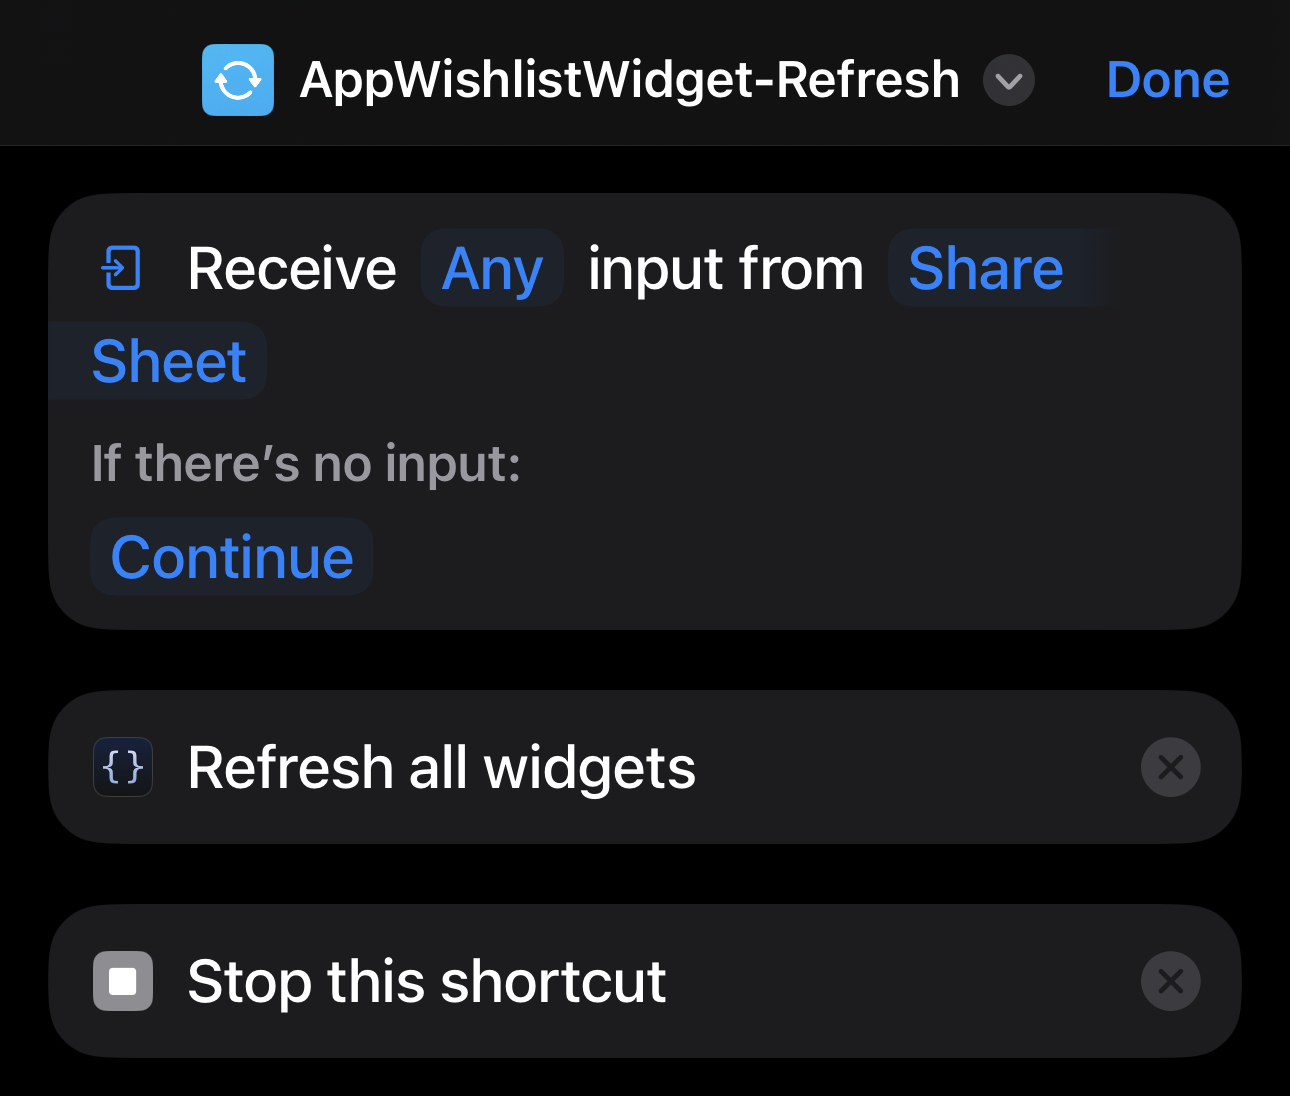 AppWishlistWidget-Refresh.shortcut Screenshot